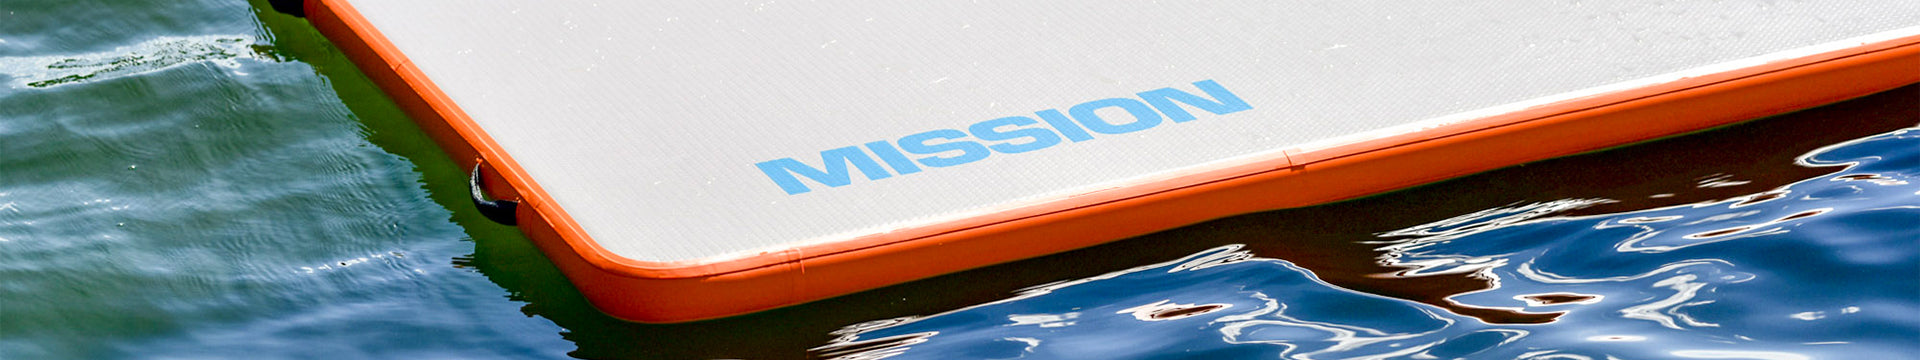 Mission Mats & Boat Gear